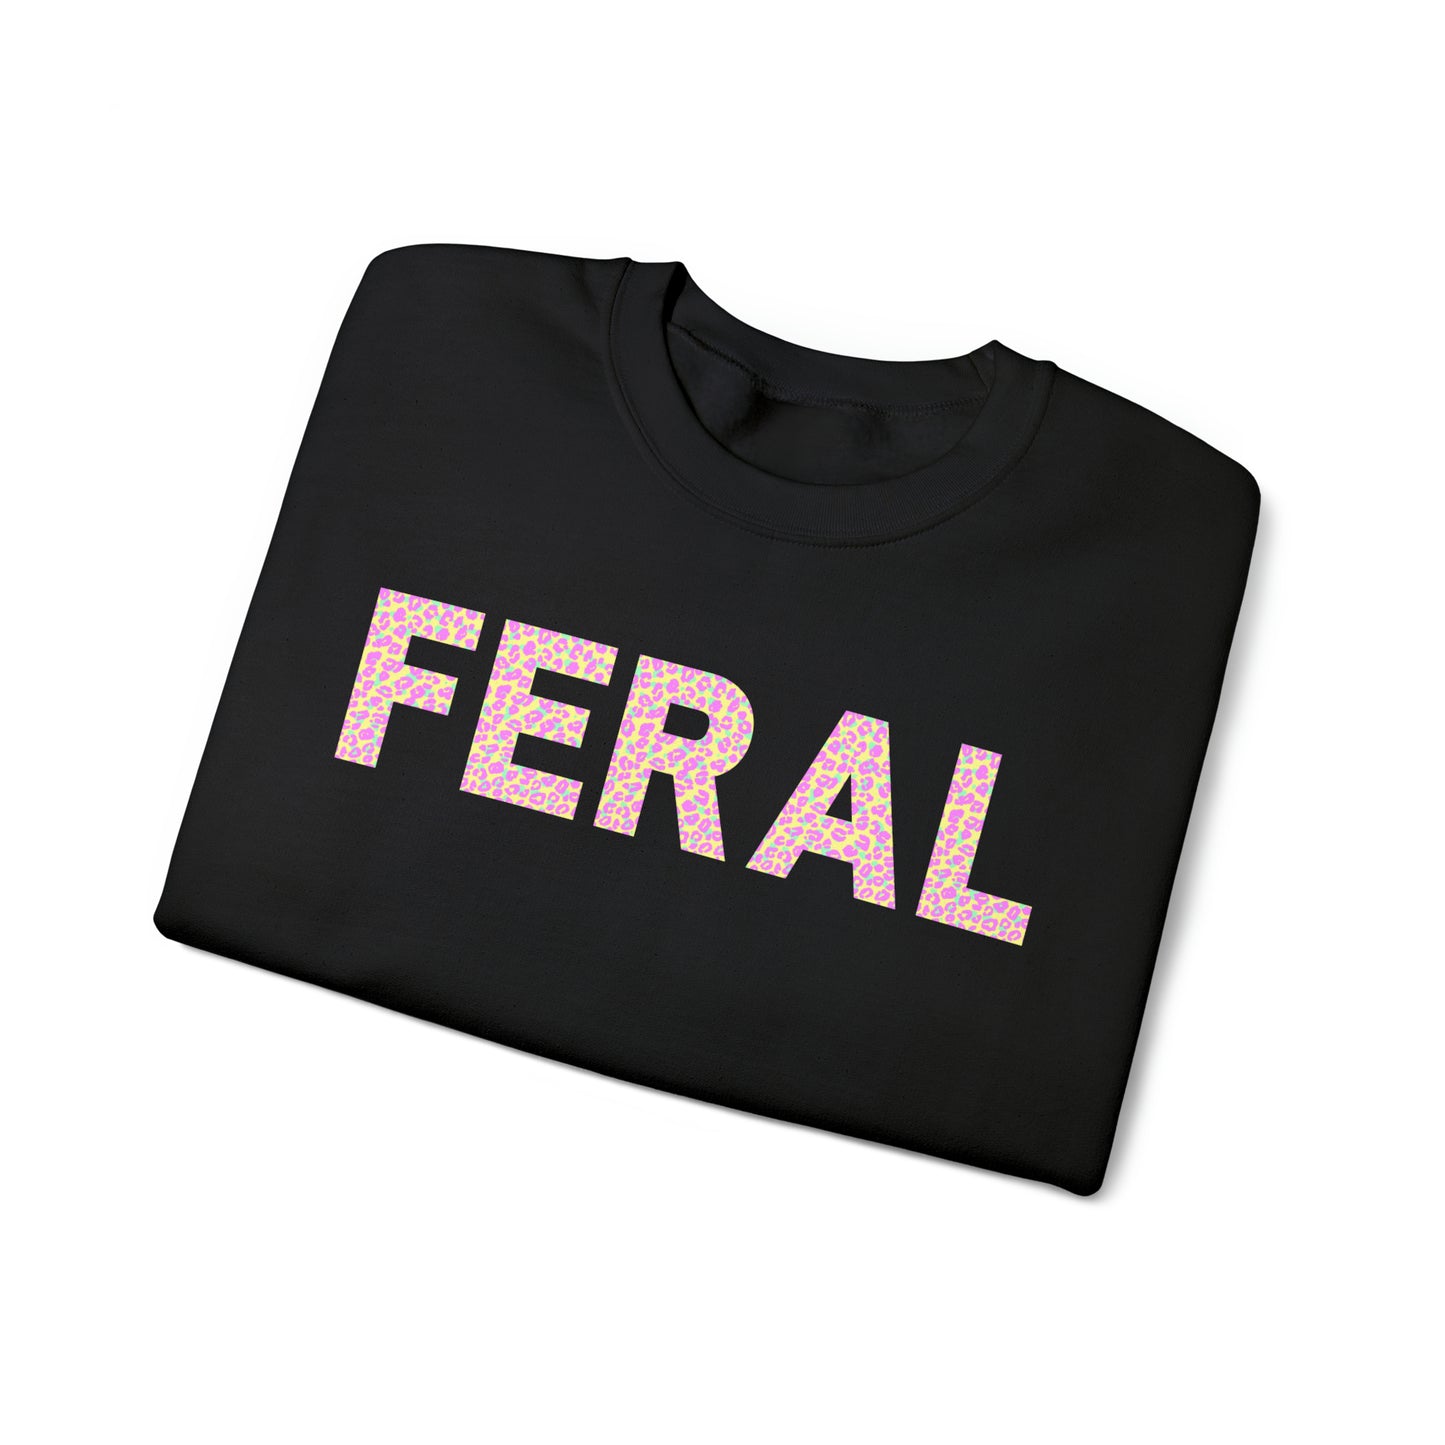 FERAL Neon Cheetah Lettering Crewneck Sweatshirt